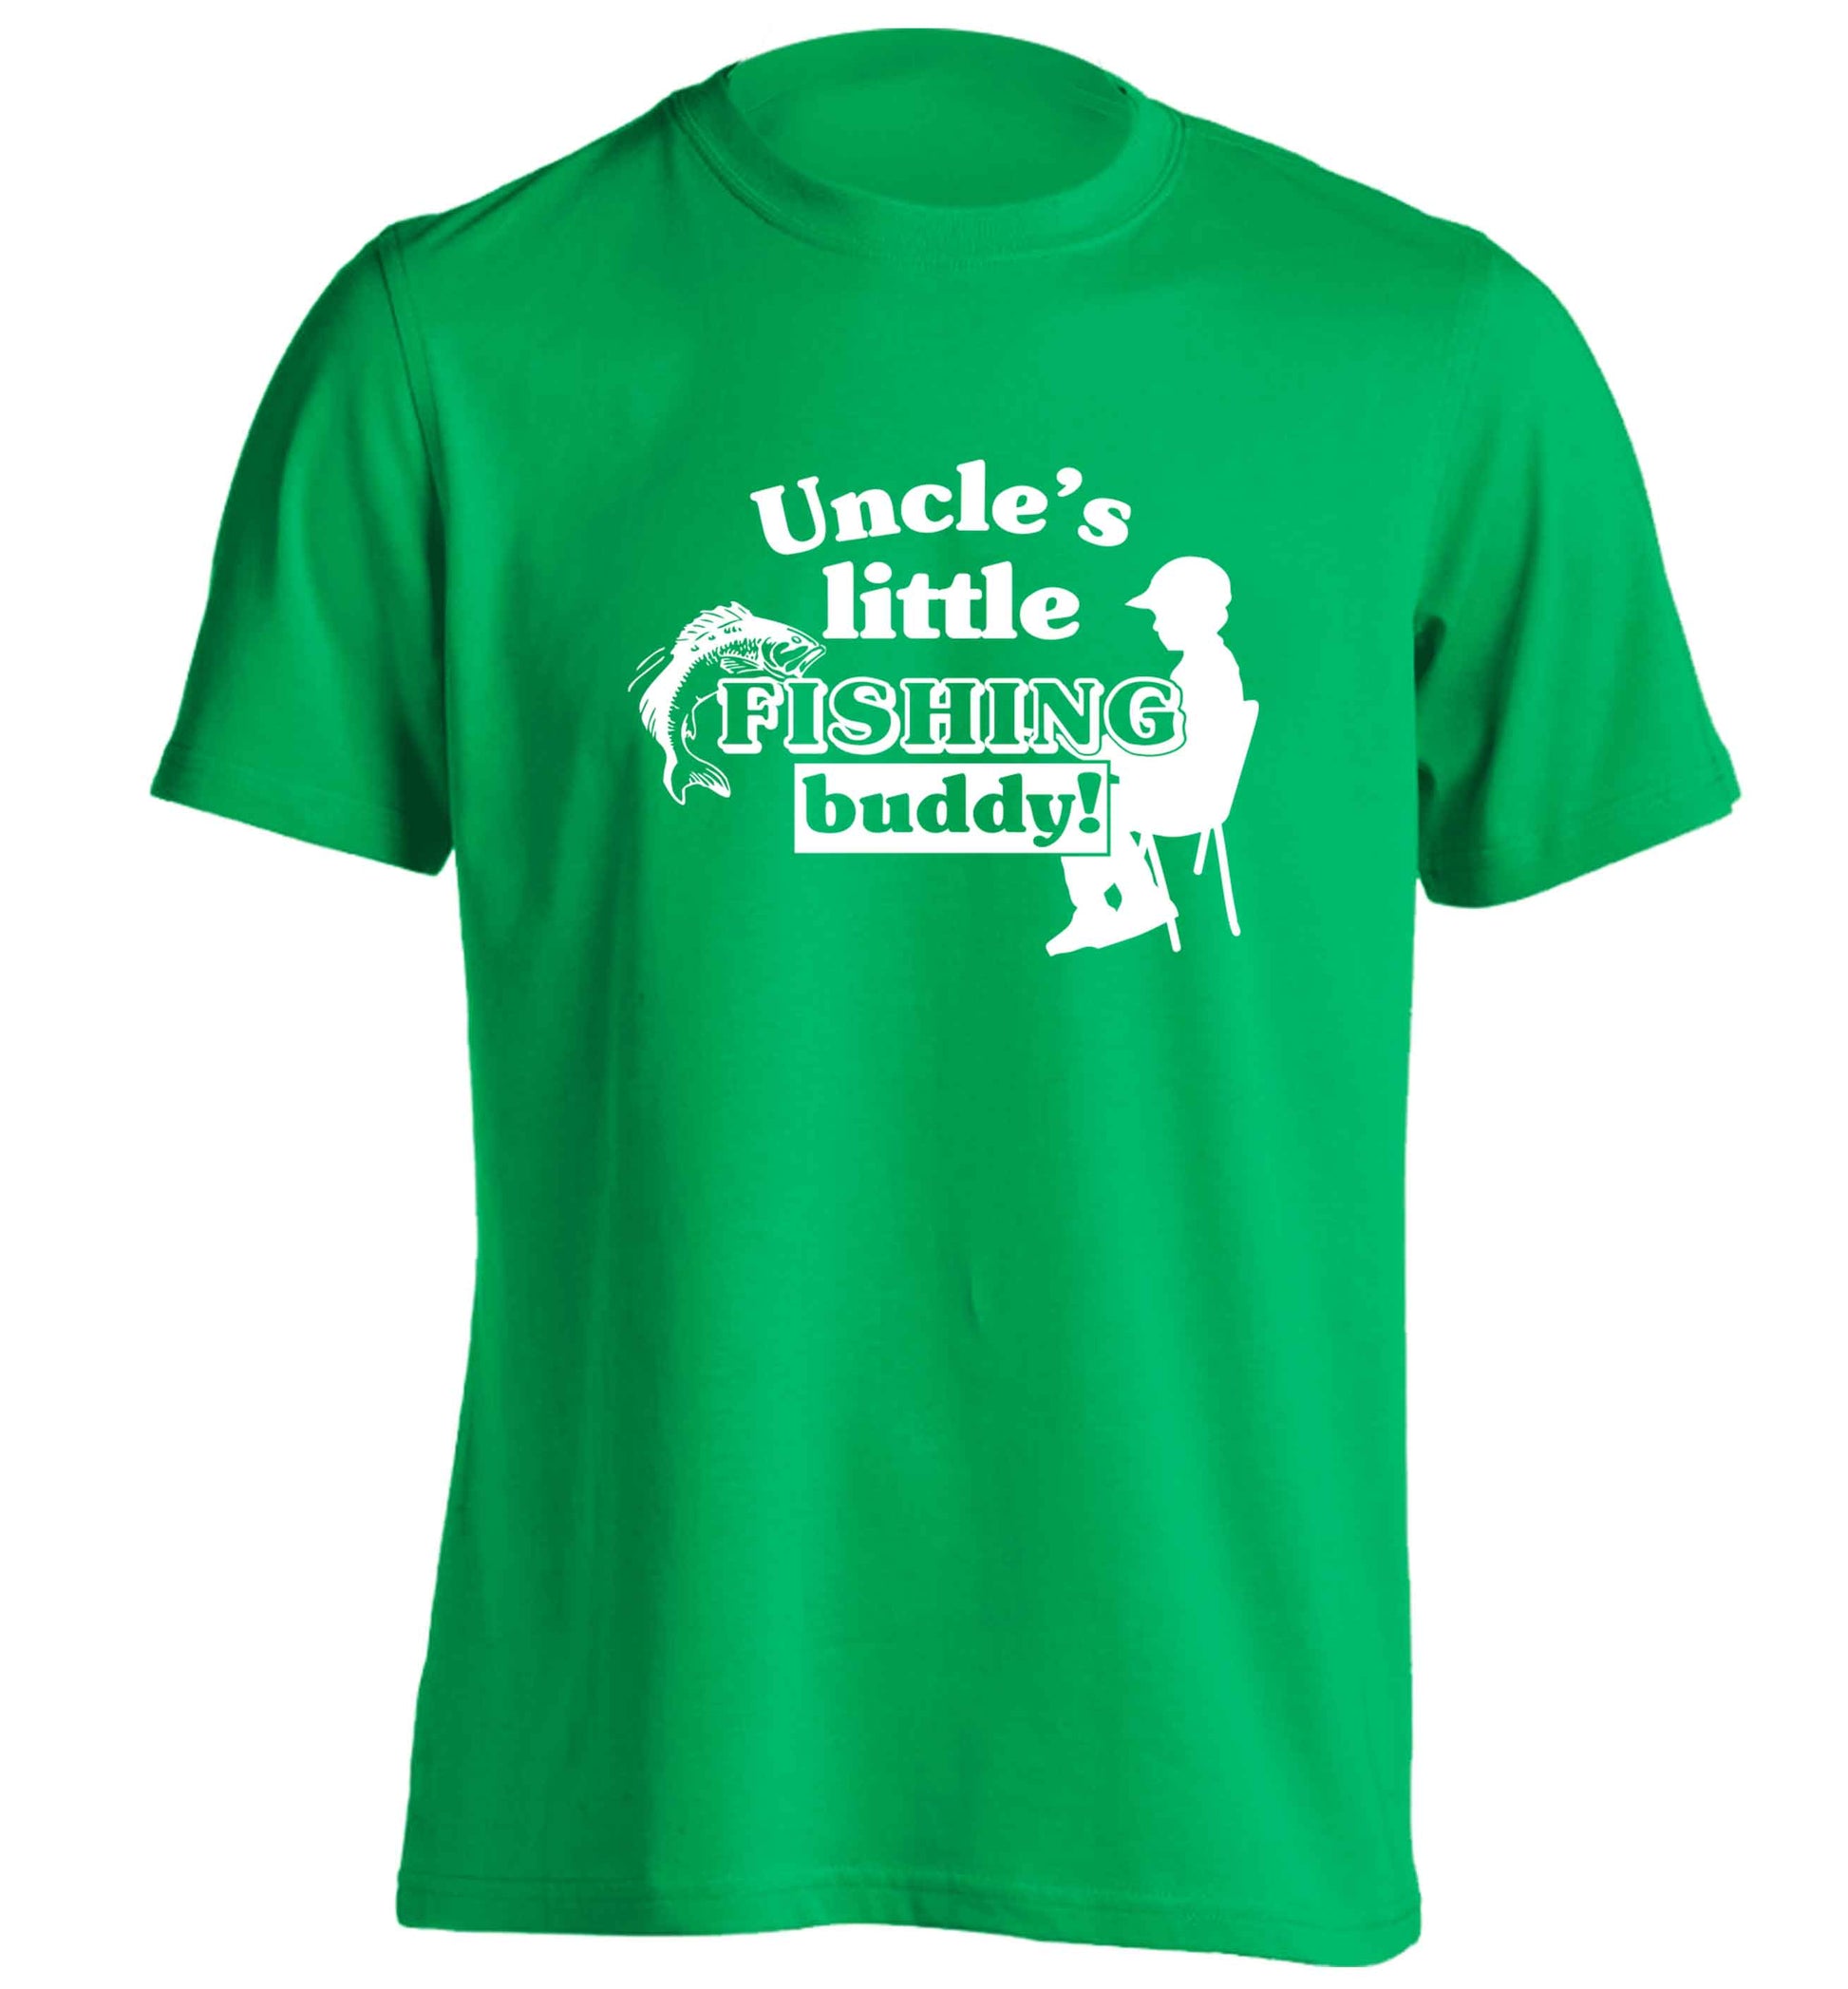 Uncle's little fishing buddy adults unisex green Tshirt 2XL